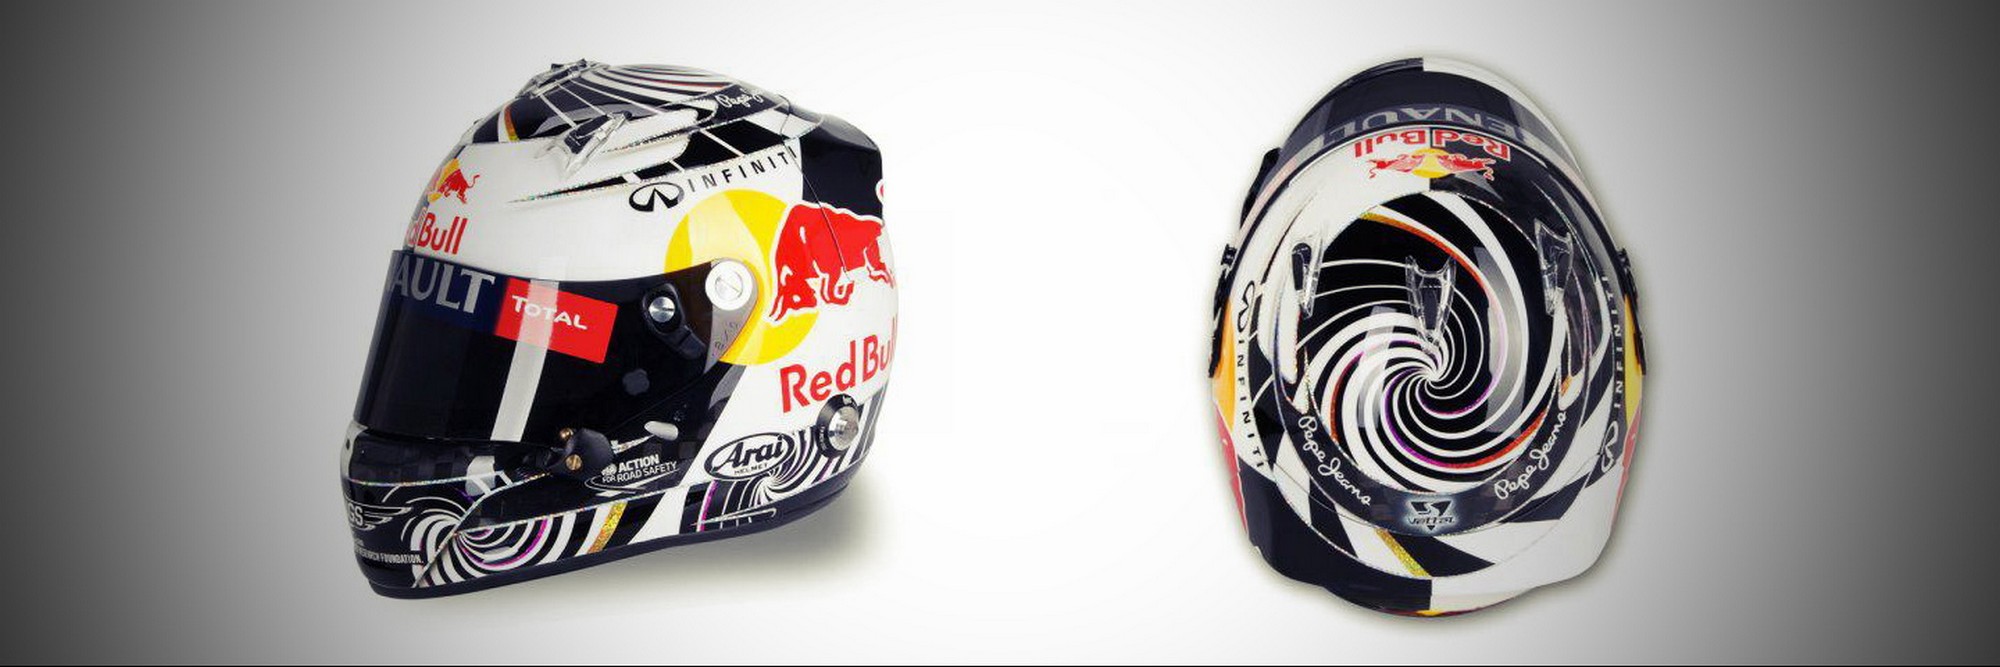 Шлем Себастьяна Феттеля на сезон 2012 года | 2012 helmet of Sebastian Vettel